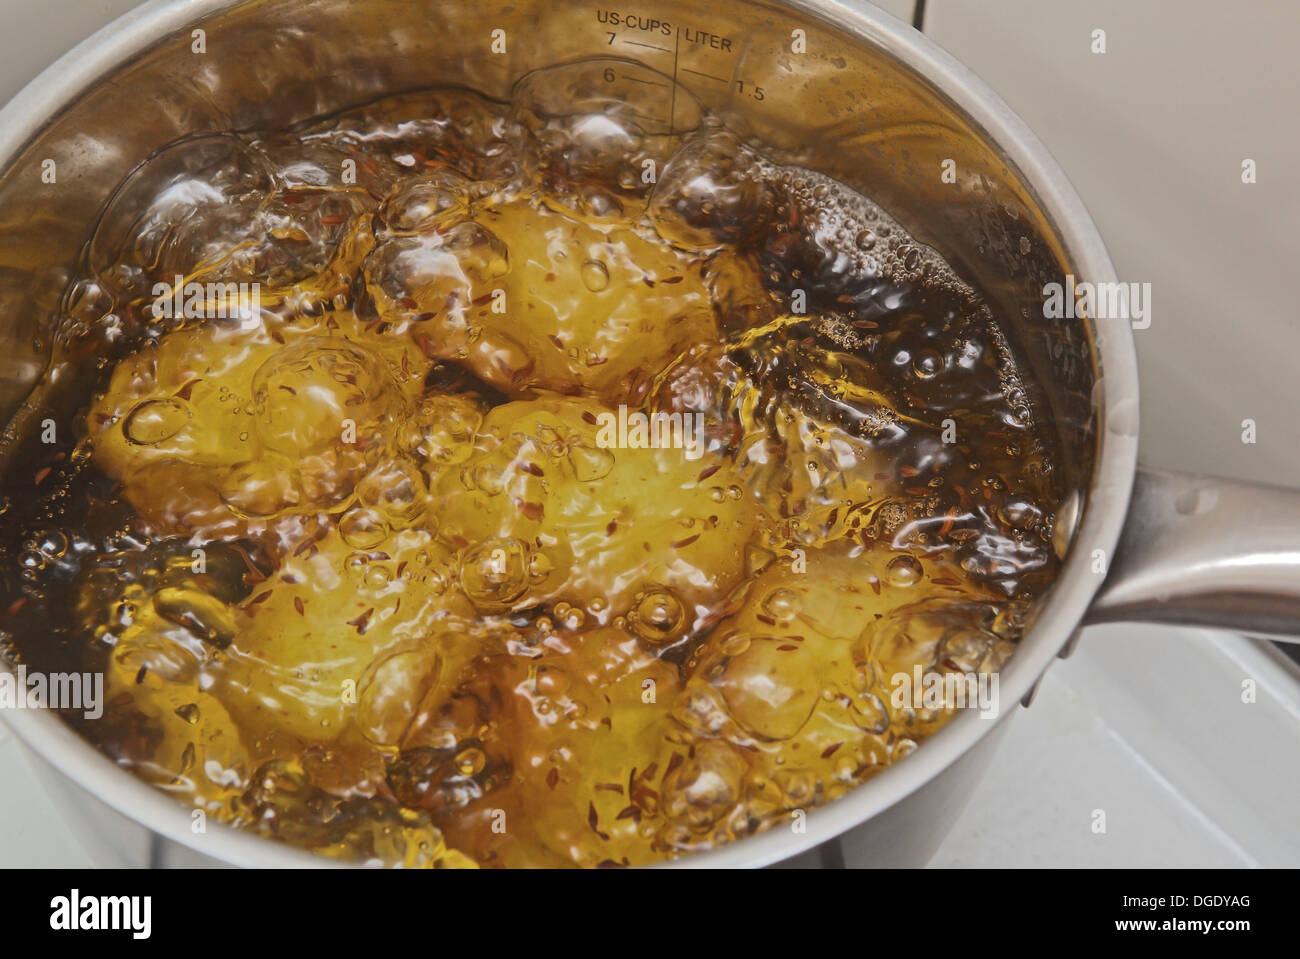 https://c8.alamy.com/comp/DGDYAG/pot-with-a-boiling-potatoes-DGDYAG.jpg